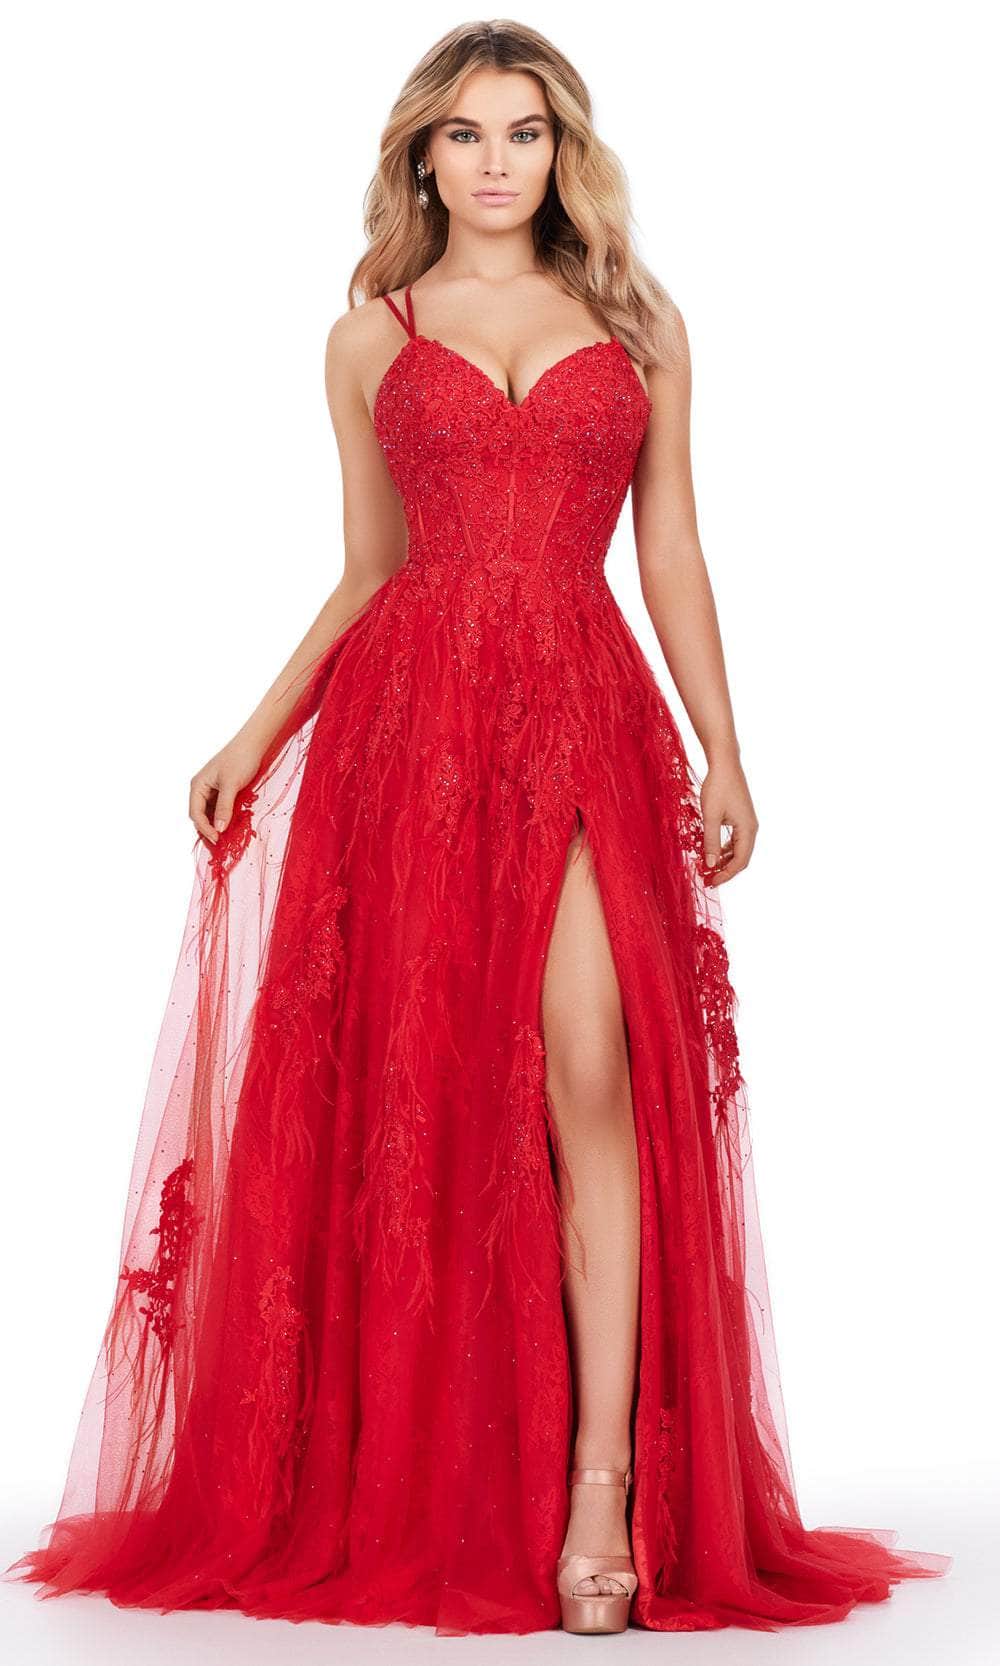 Ashley Lauren 11480 - Applique Corset Prom Dress with Slit 00 /  Red